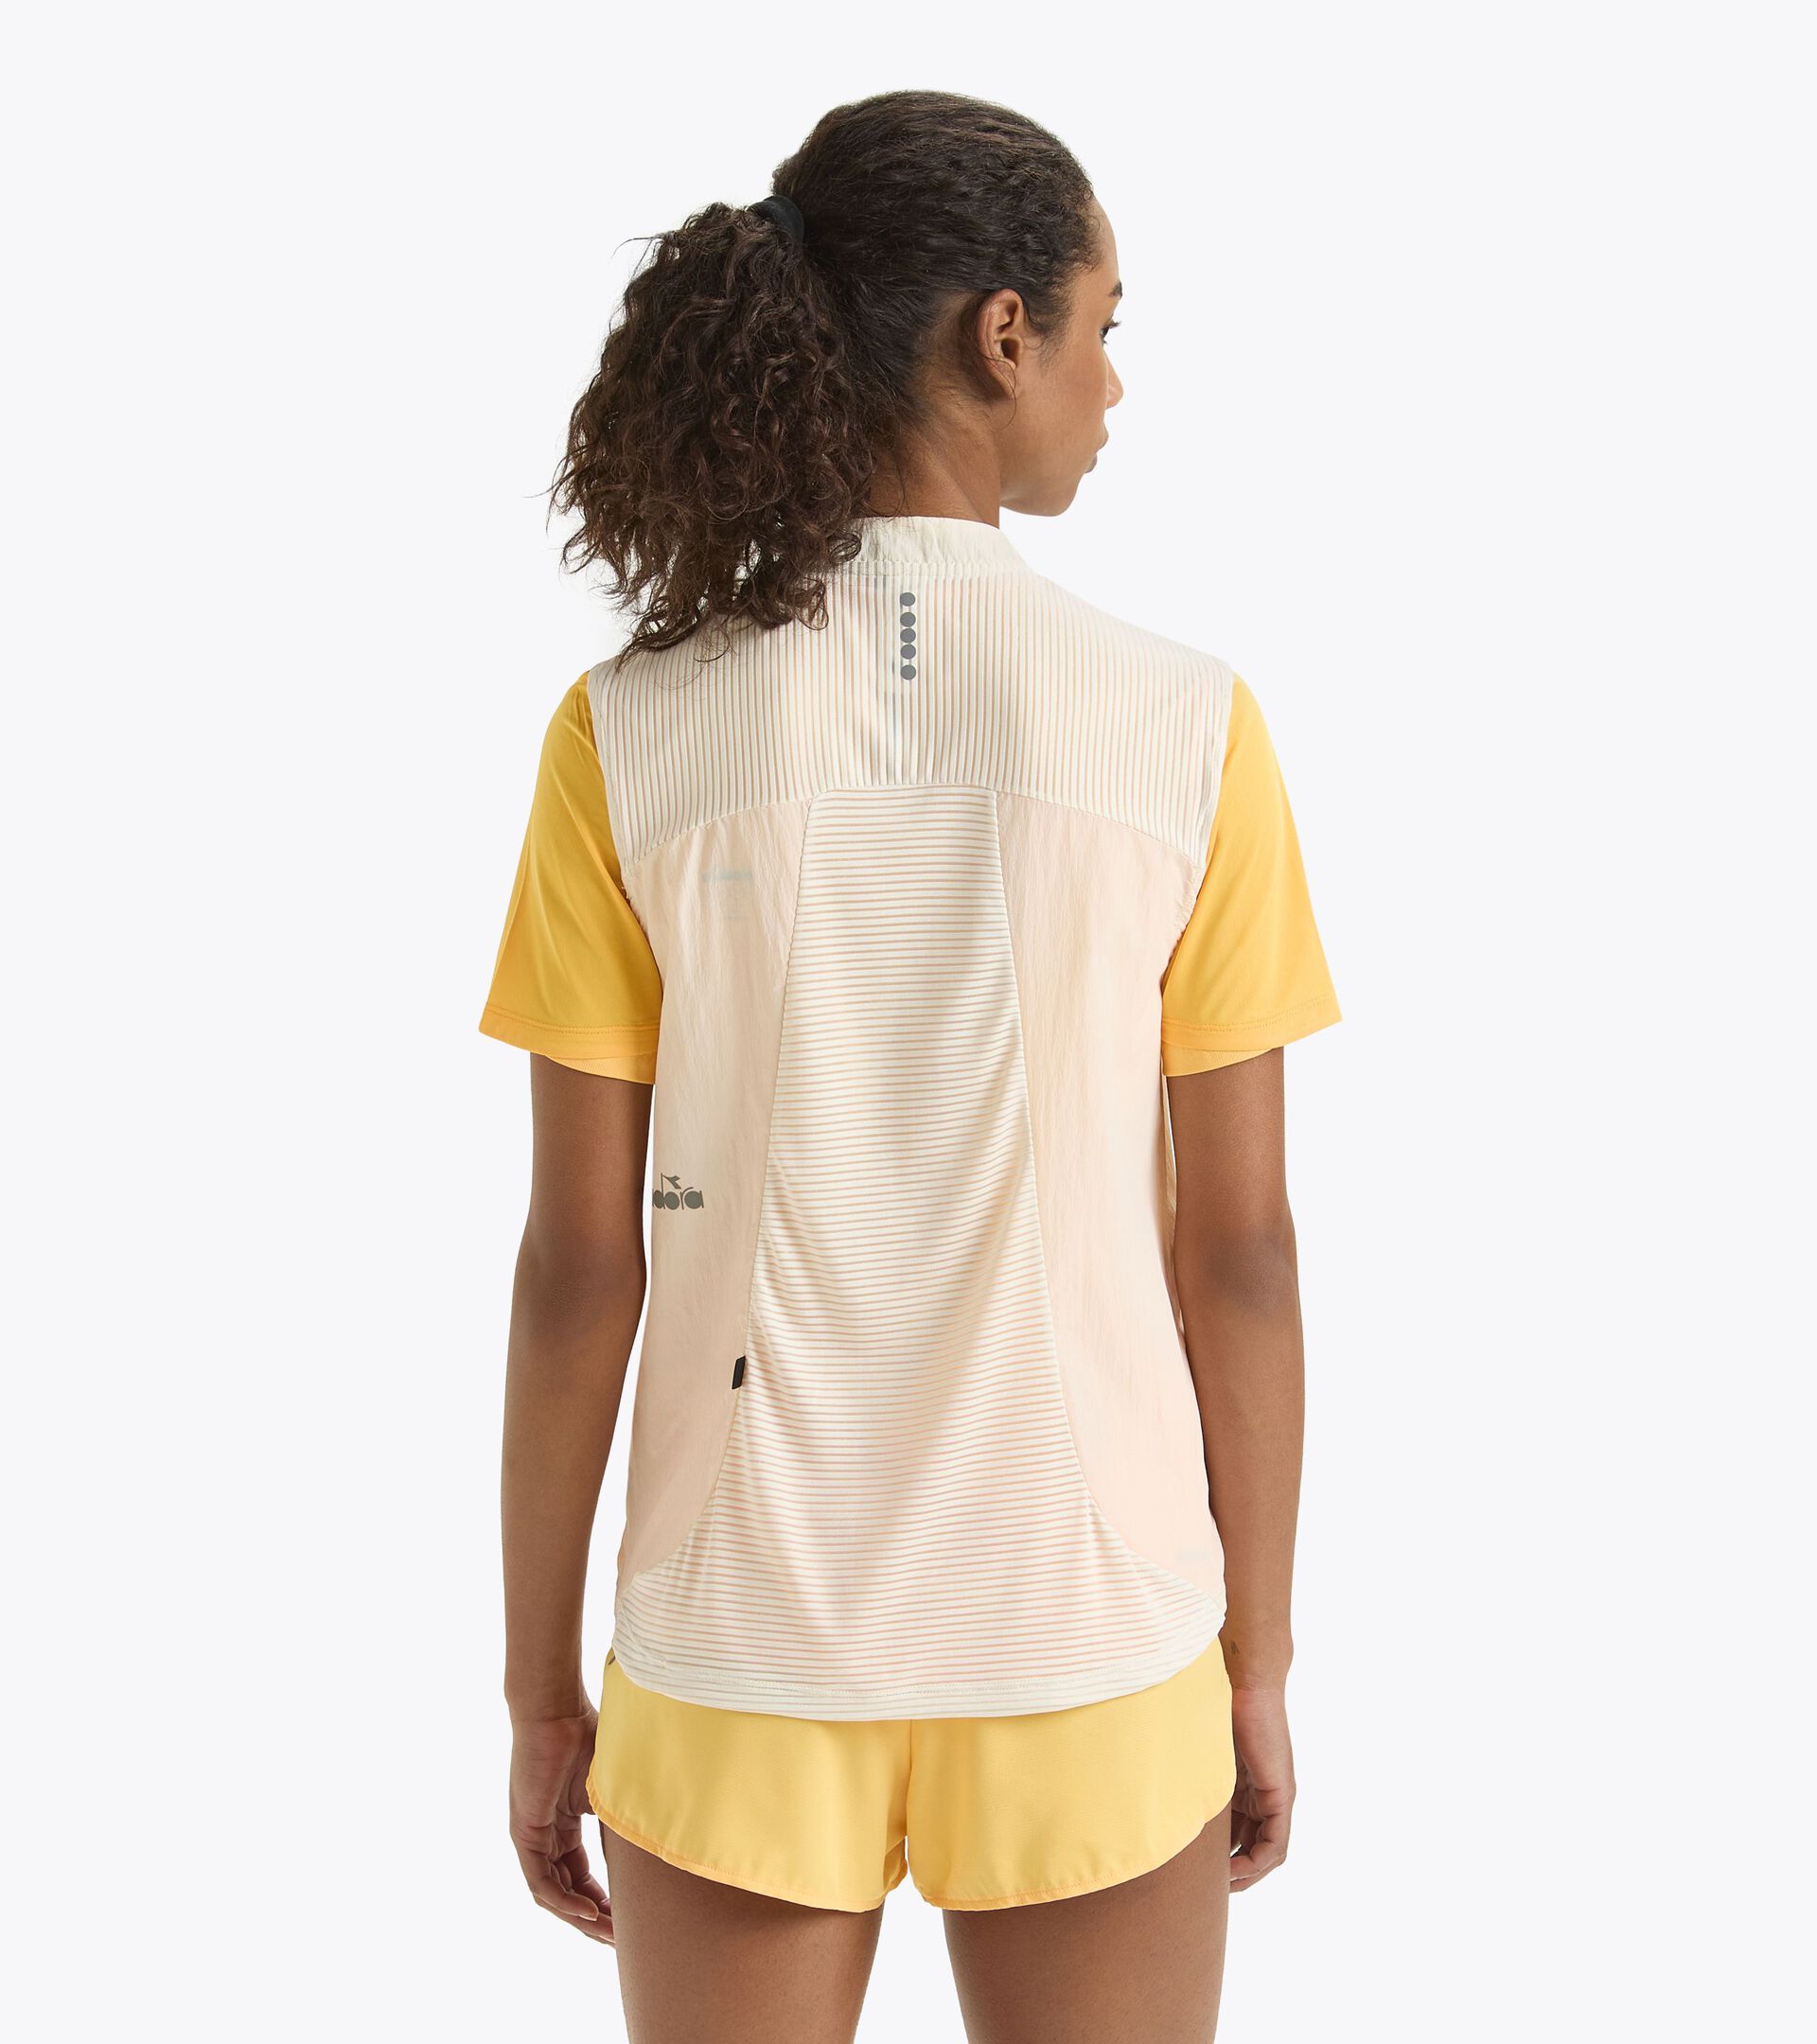 Running set - Vest and t-shirt - Women’s
 L. MULTILAYER VEST RUN CREW WHISPER WHITE/PALE CALENDULA - Diadora